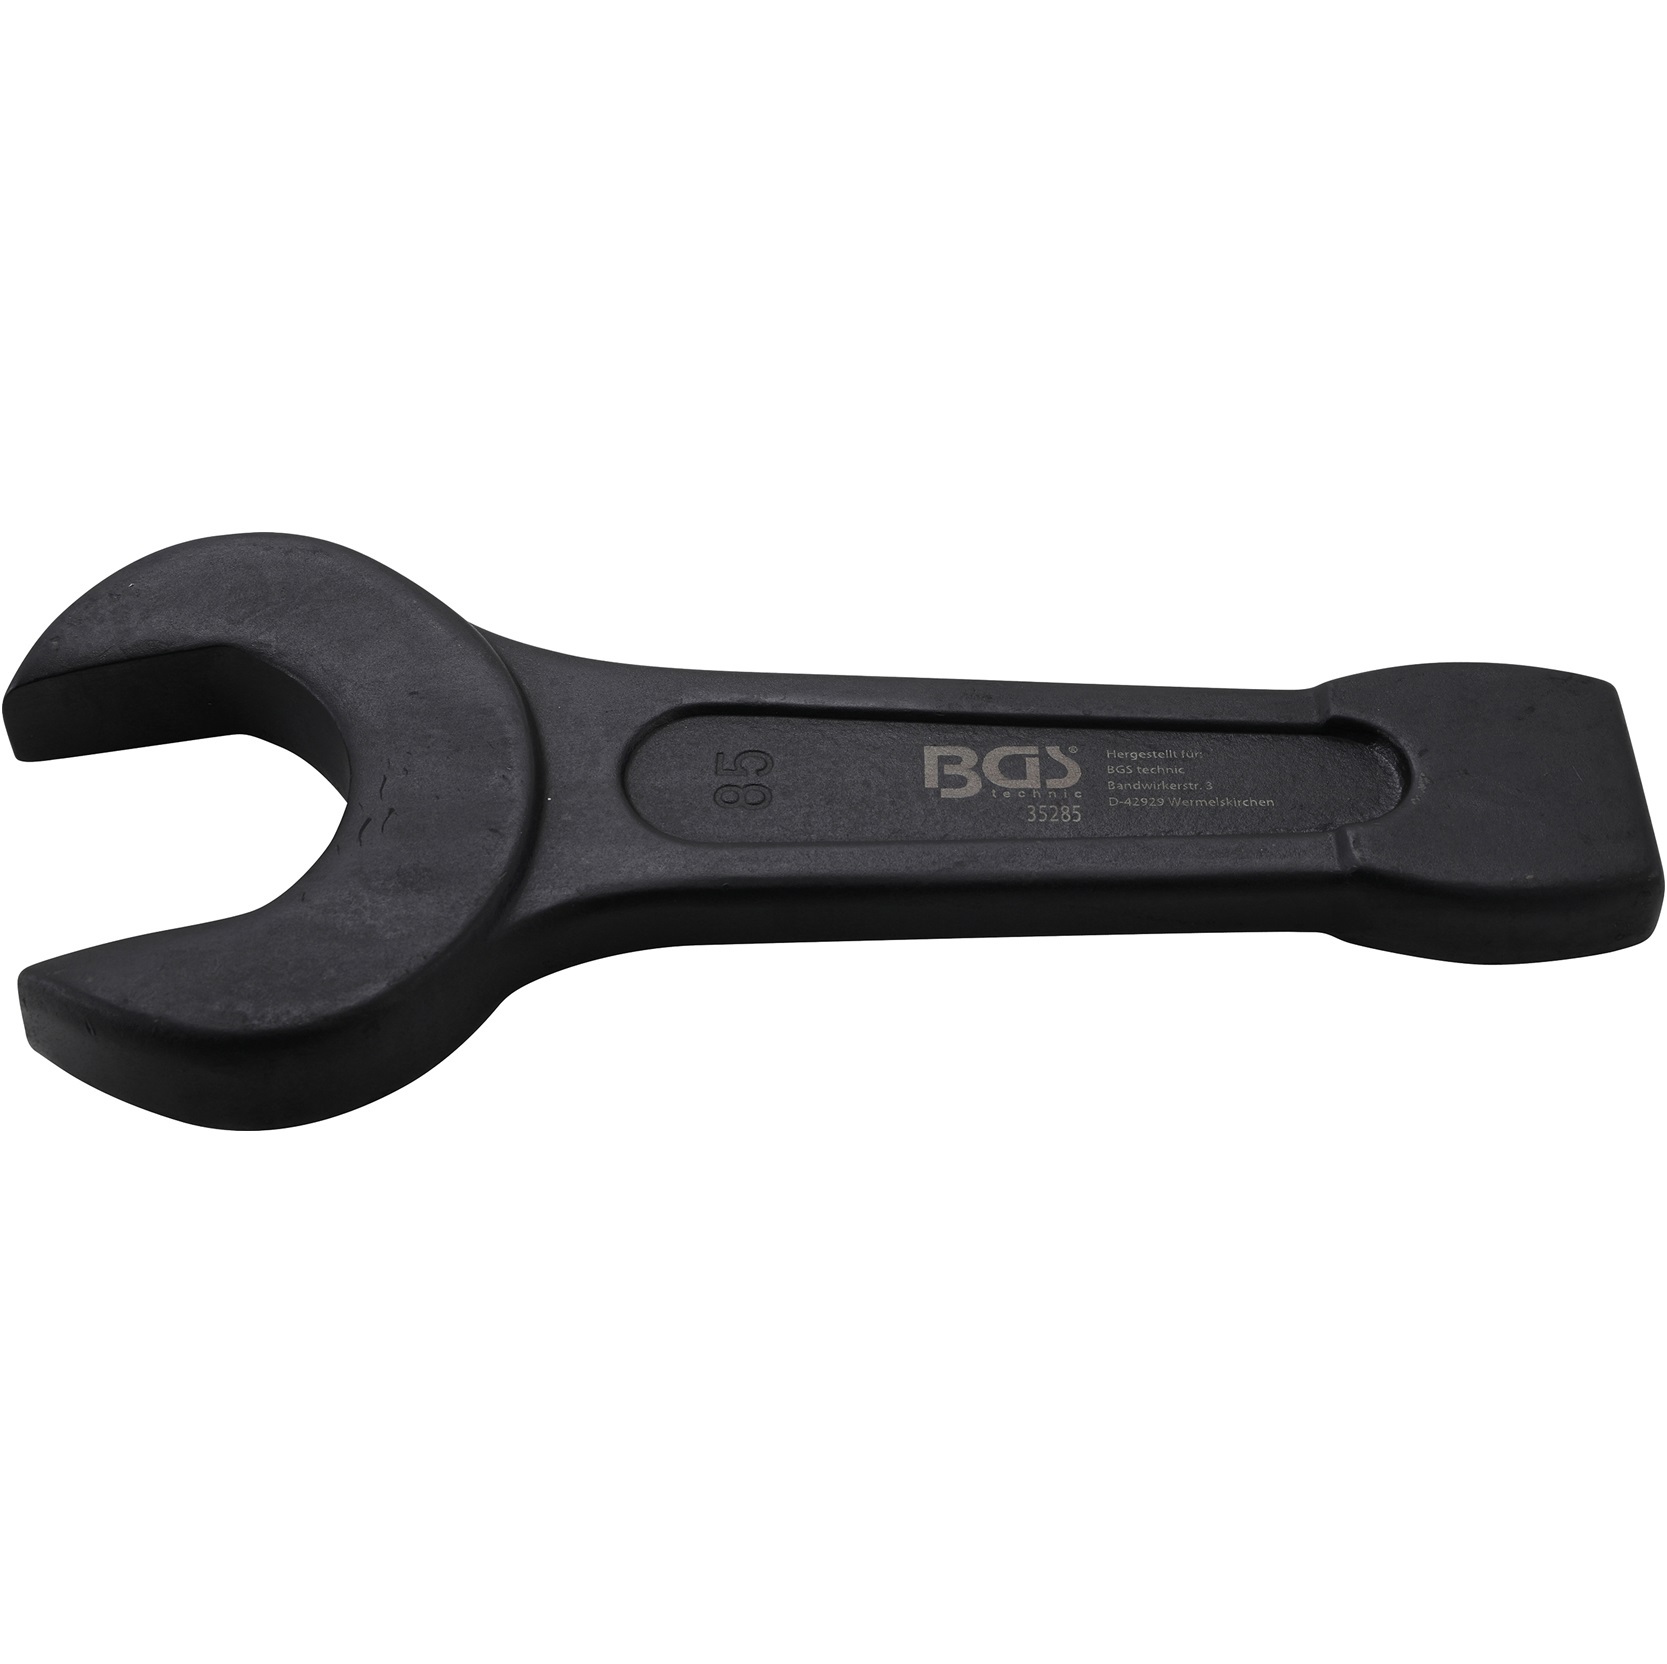 Kľúč plochý vidlicový, úderový, 85 mm BGS 35285